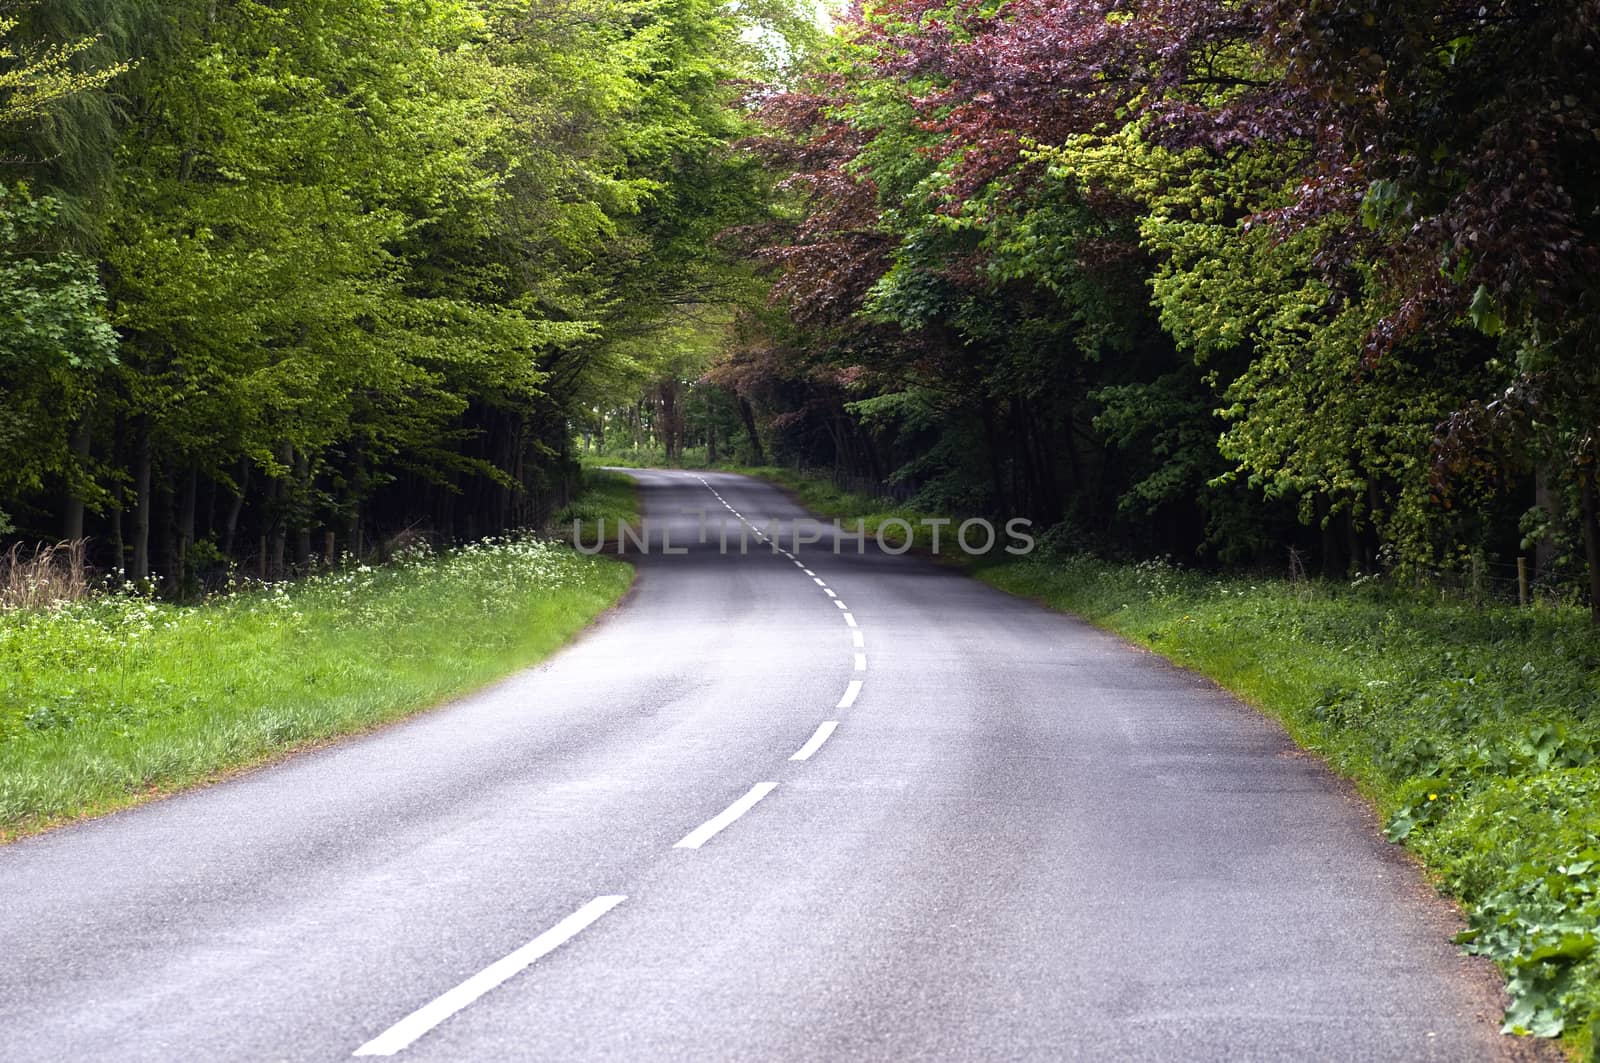 An English Country Lane